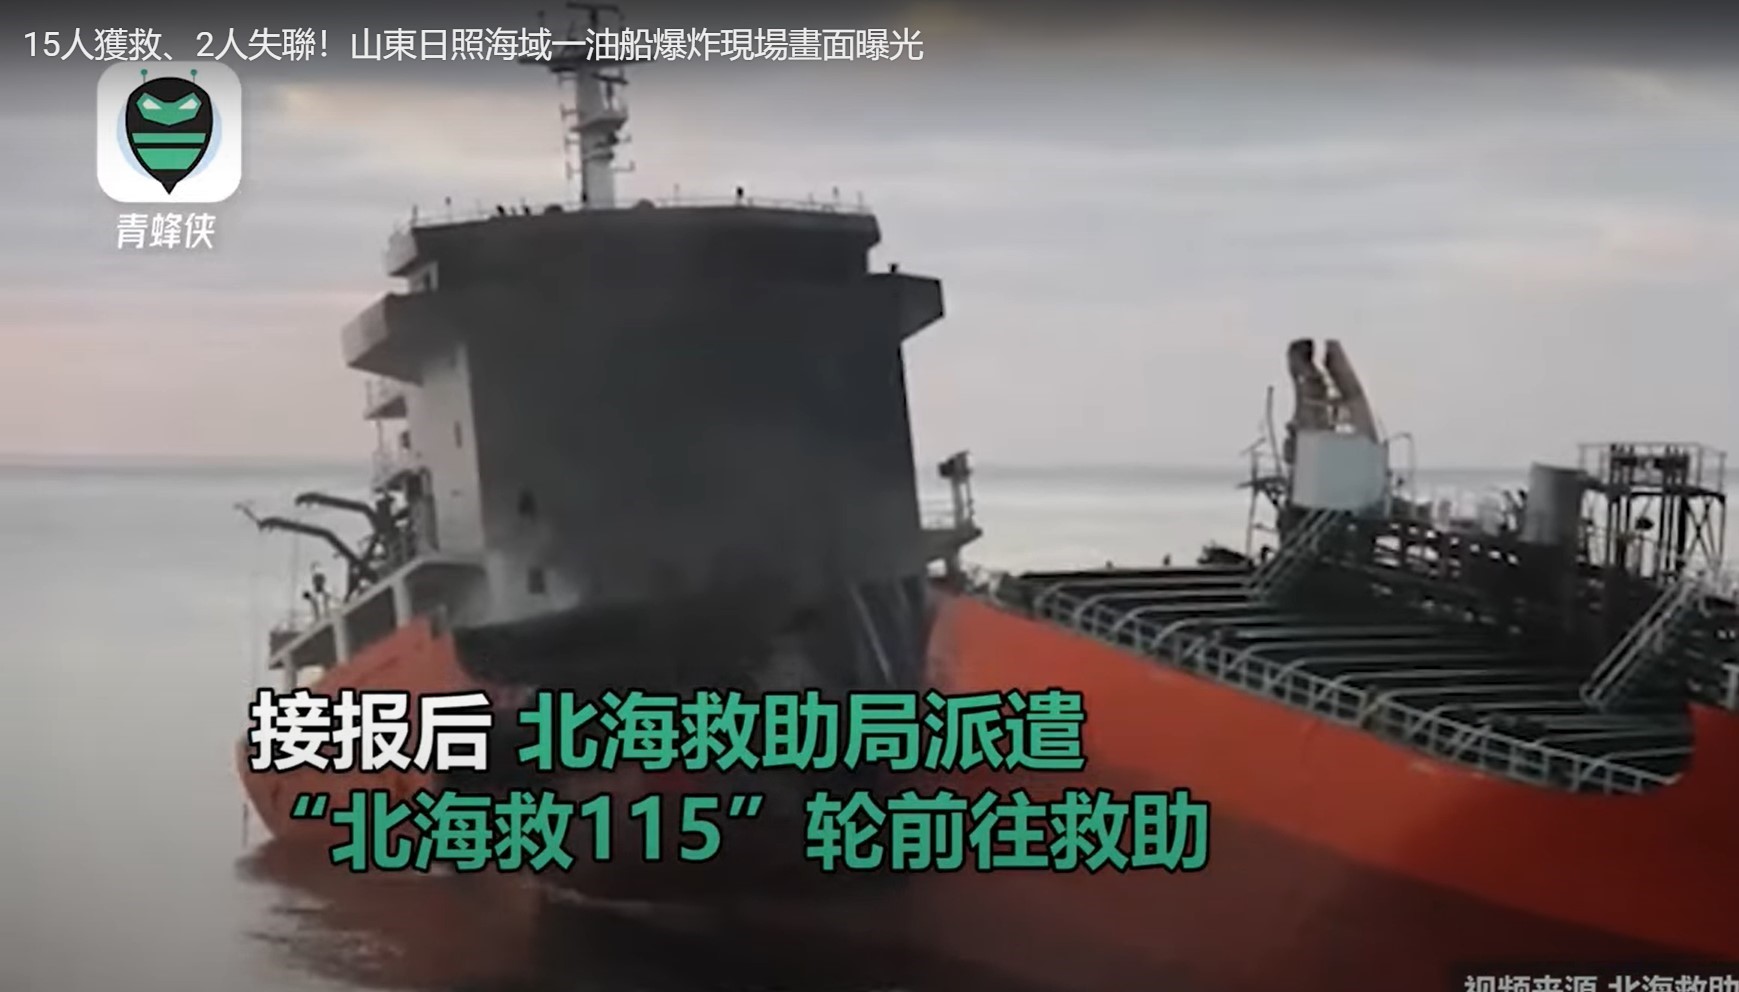 Два моряка пропали без вести после разлома китайского танкера